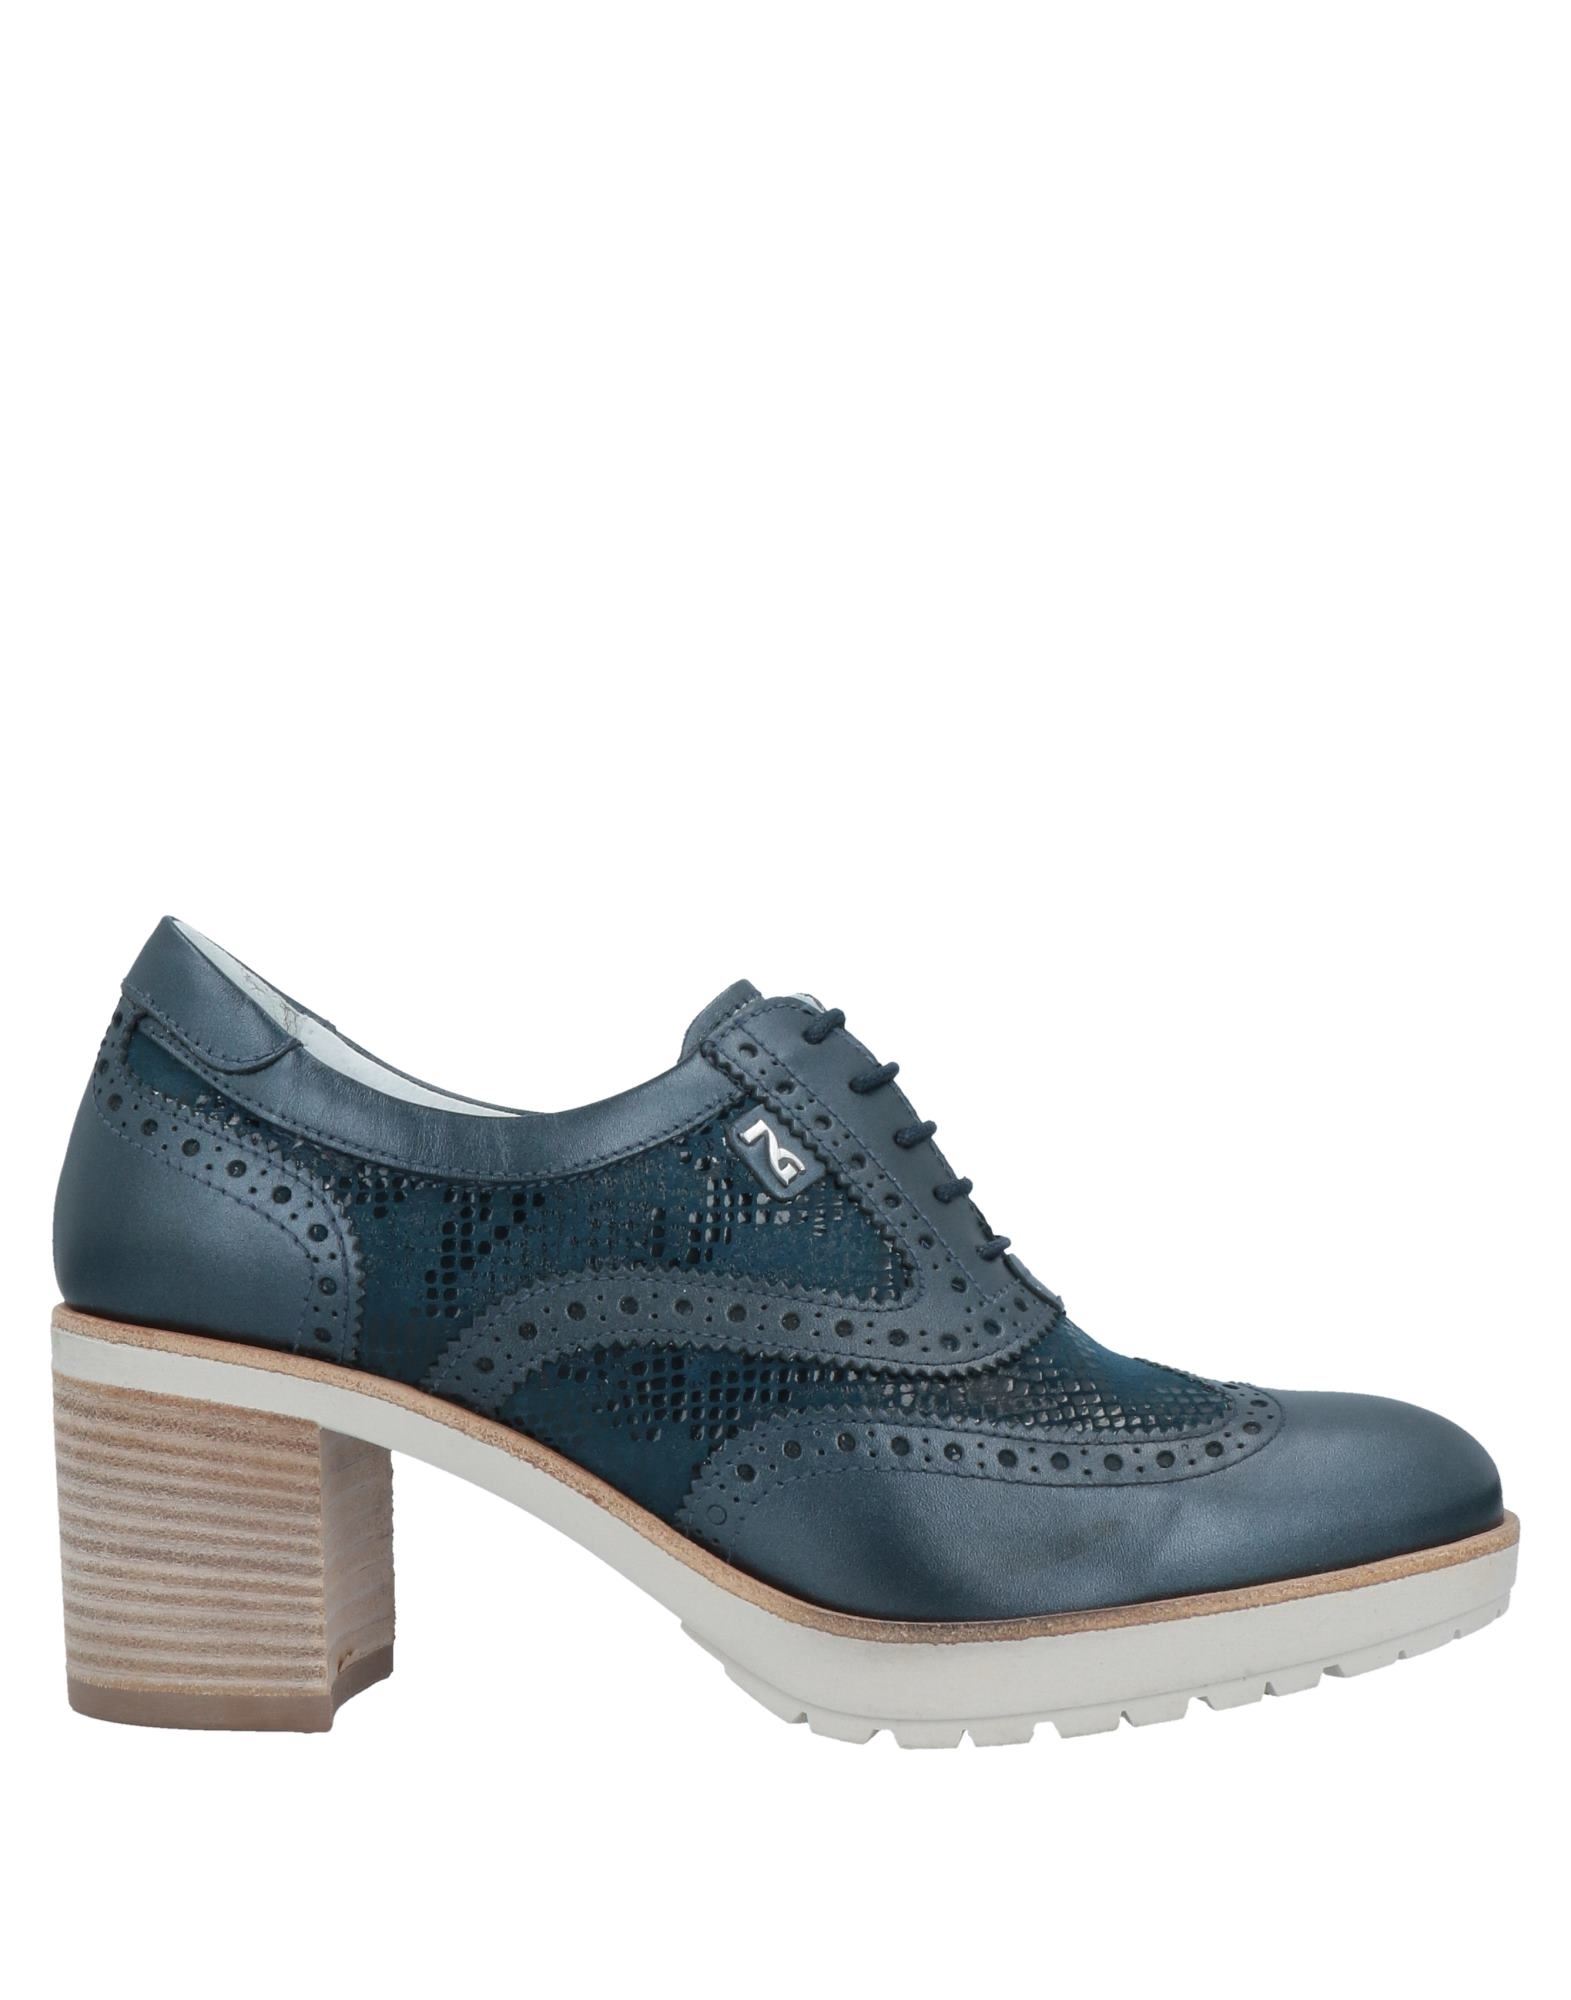 NERO GIARDINI Lace-up shoes - Item 11991610